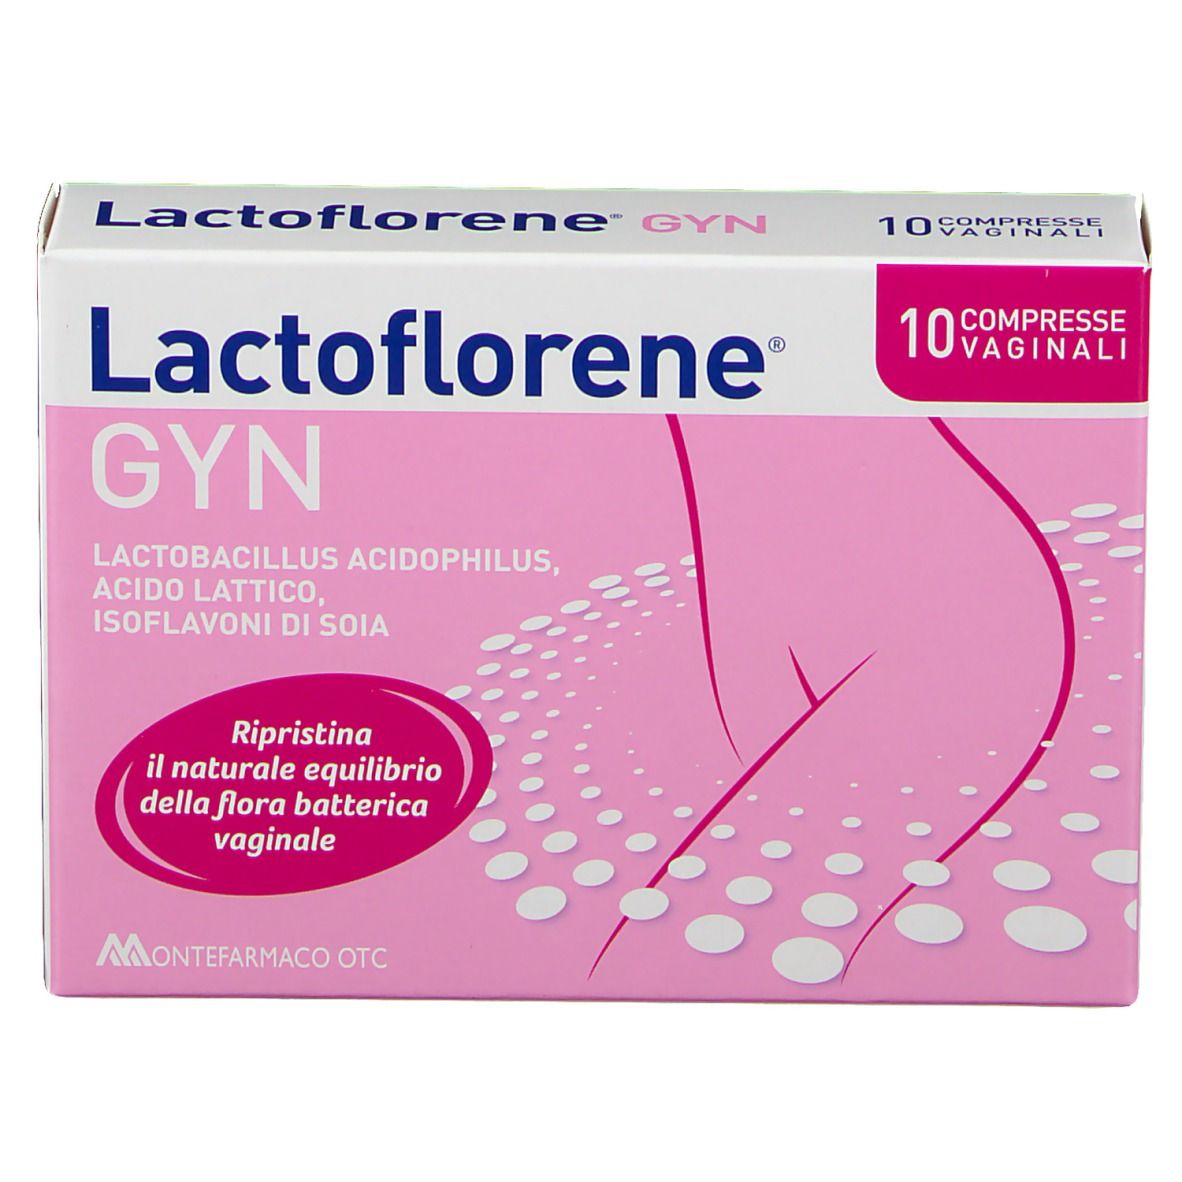 Lactoflorene® Gyn